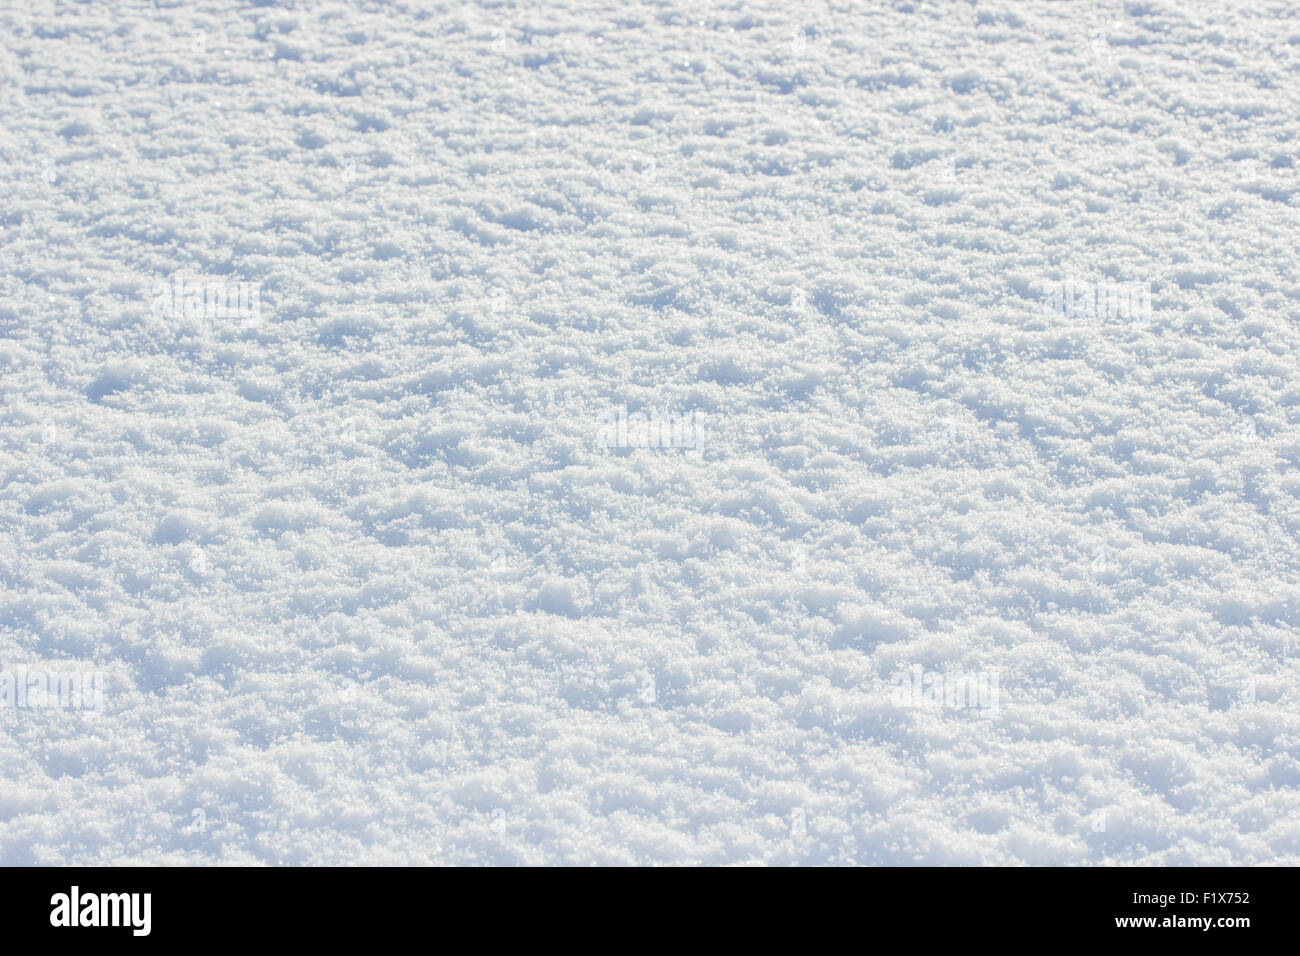 snow like a white background. Stock Photo